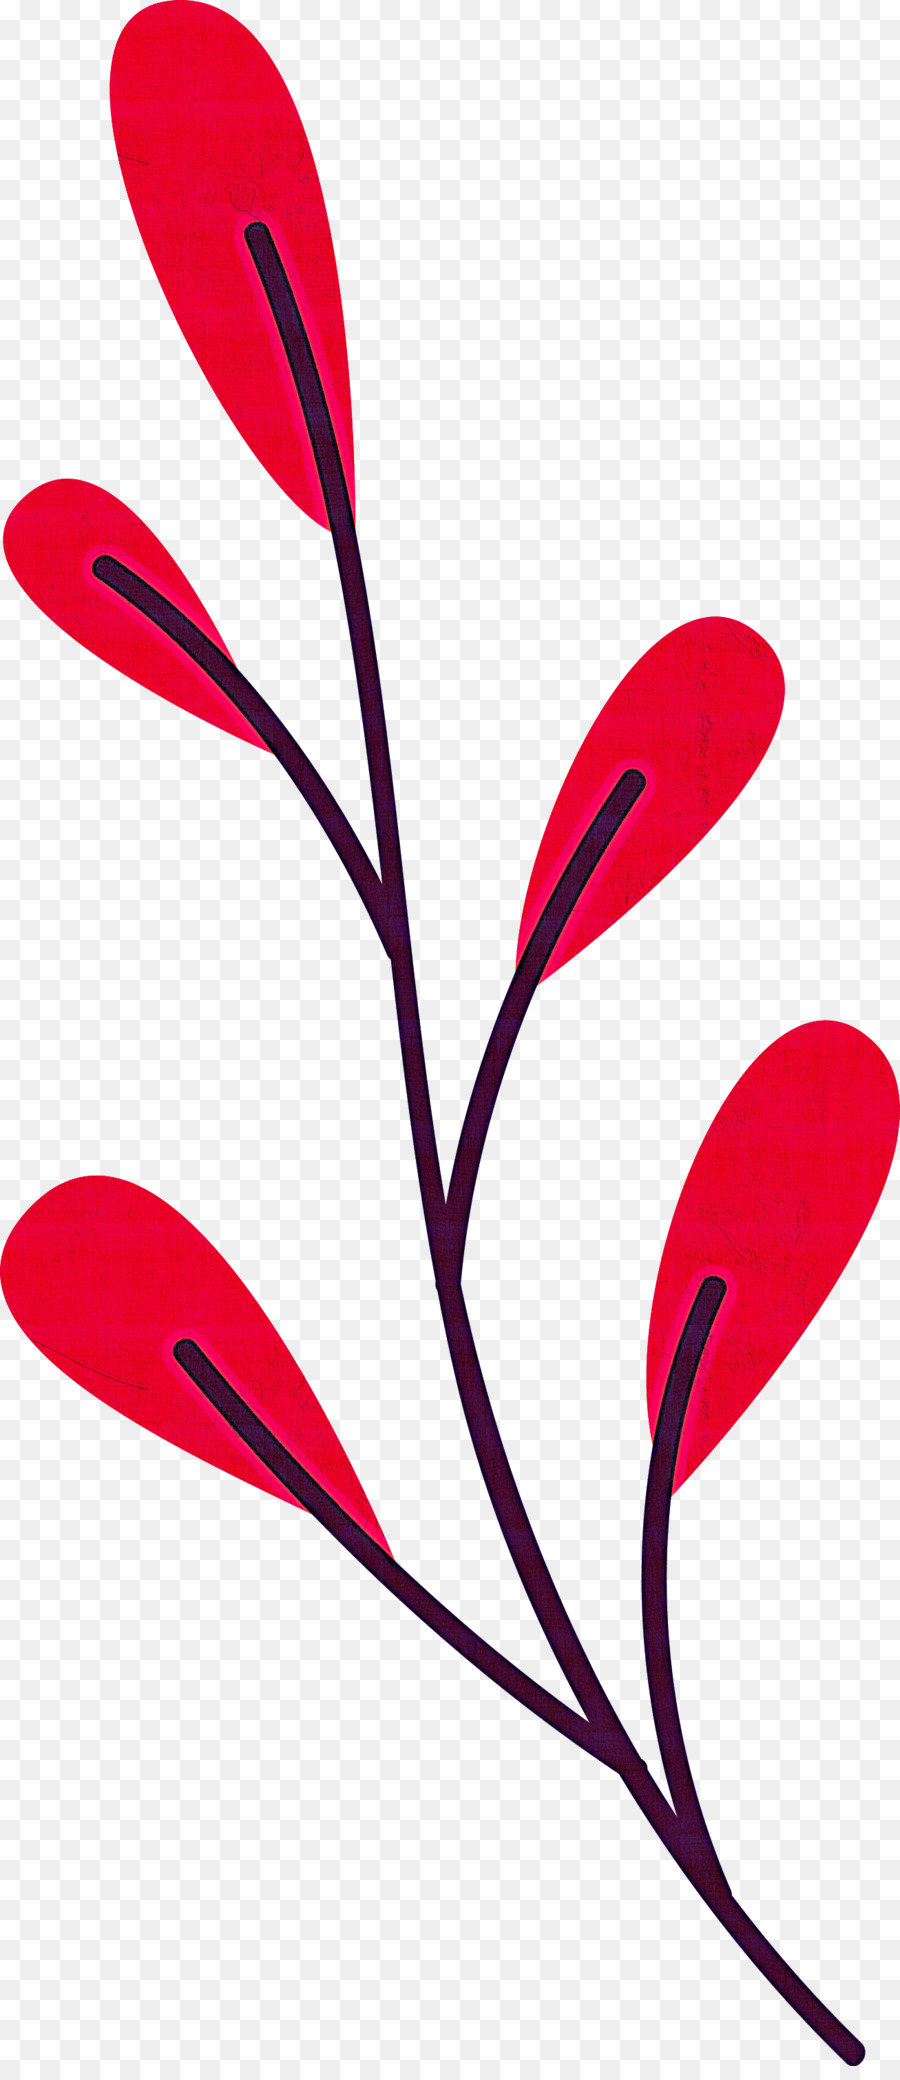 Pflanzenstamm Blütenblatt Blatt Linie Blume - 